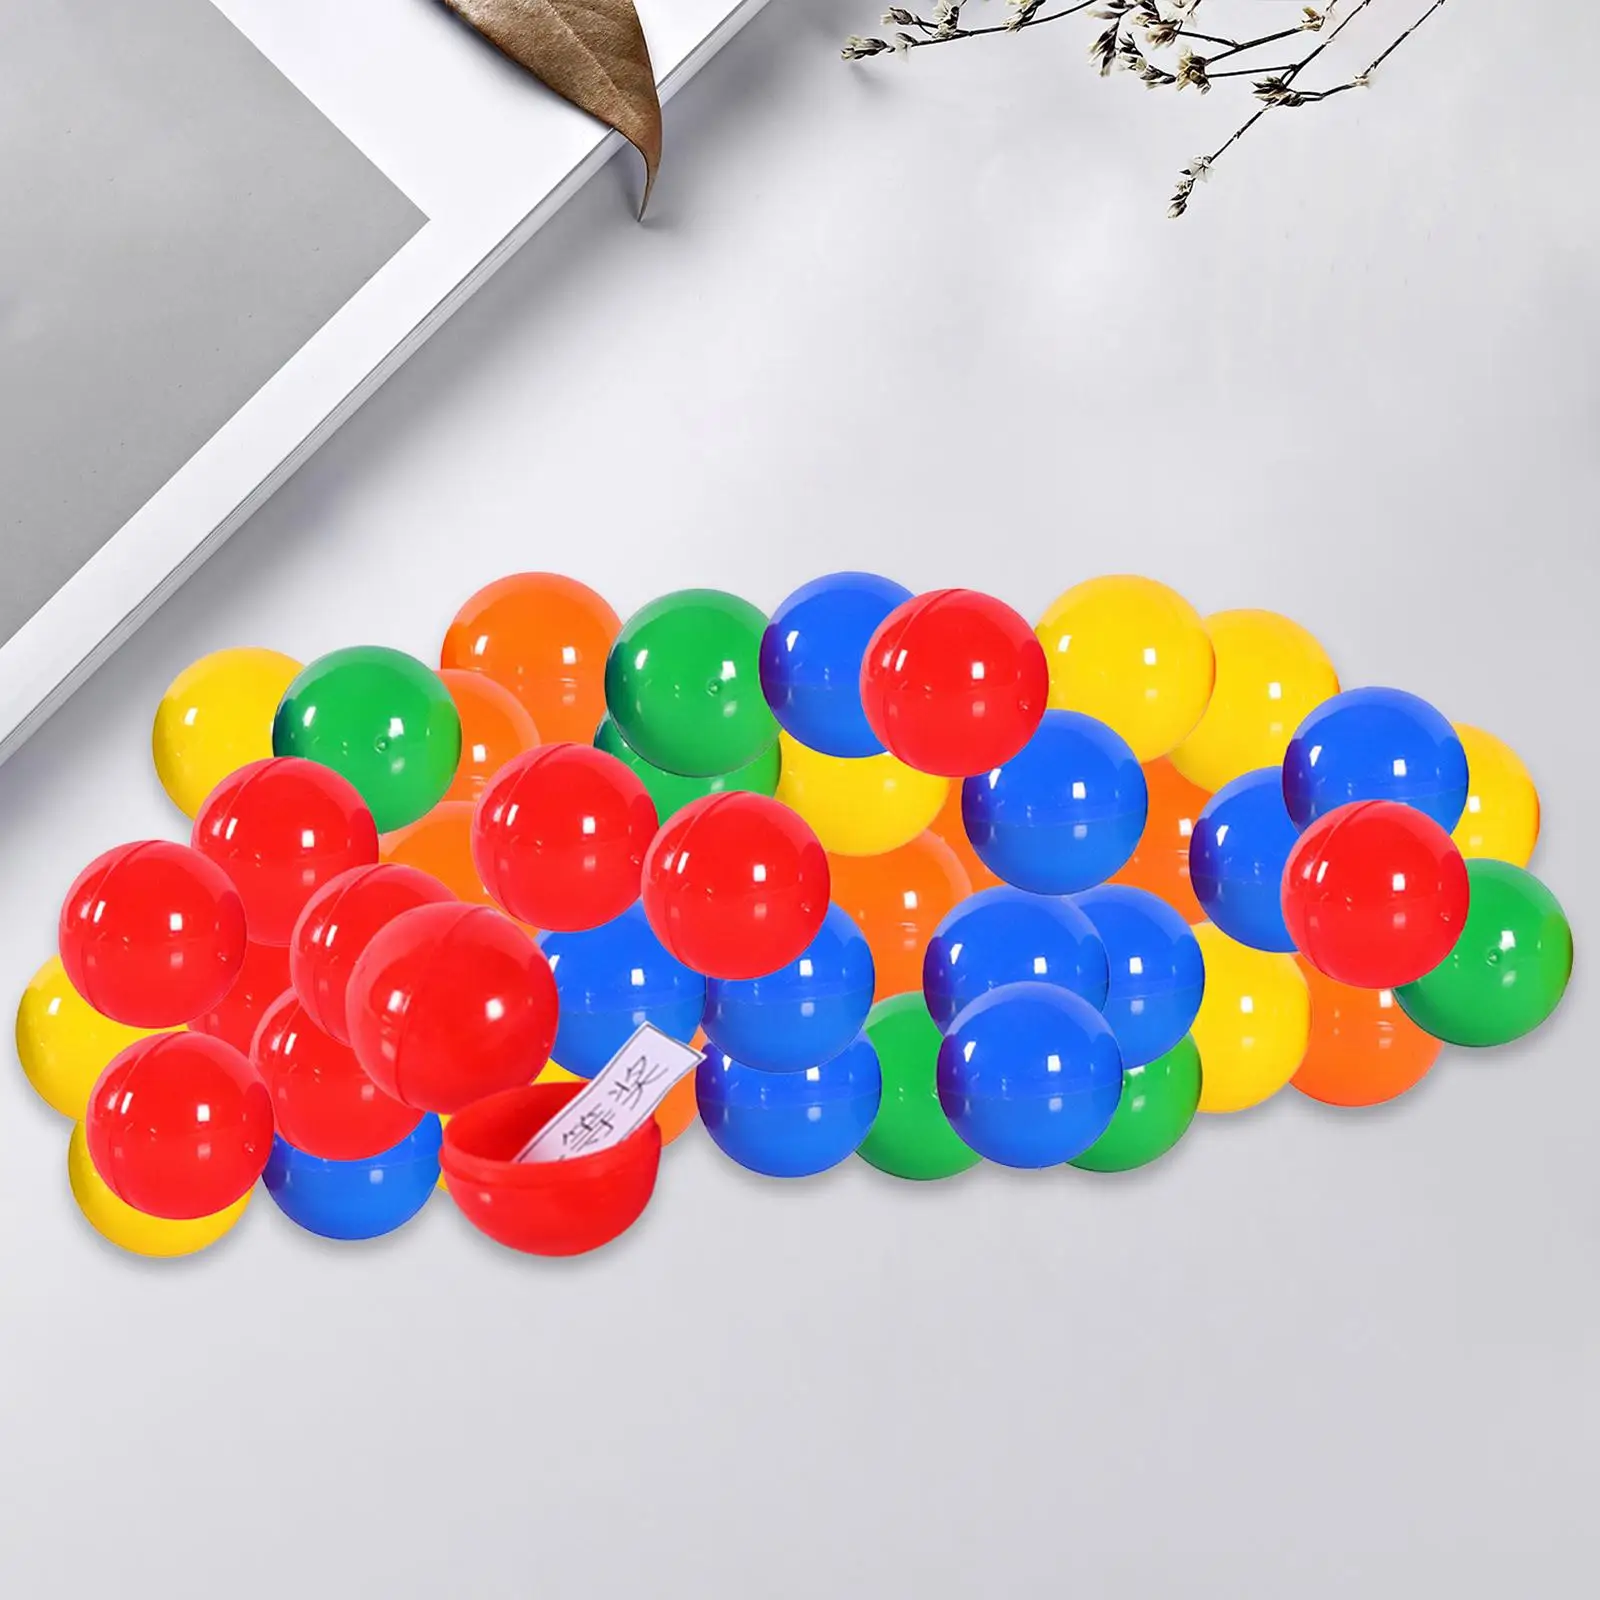 50Pcs Bingo Ball Supplies Opening Replacement Portable Universal Raffle Balls for entertainment Home Market Parties